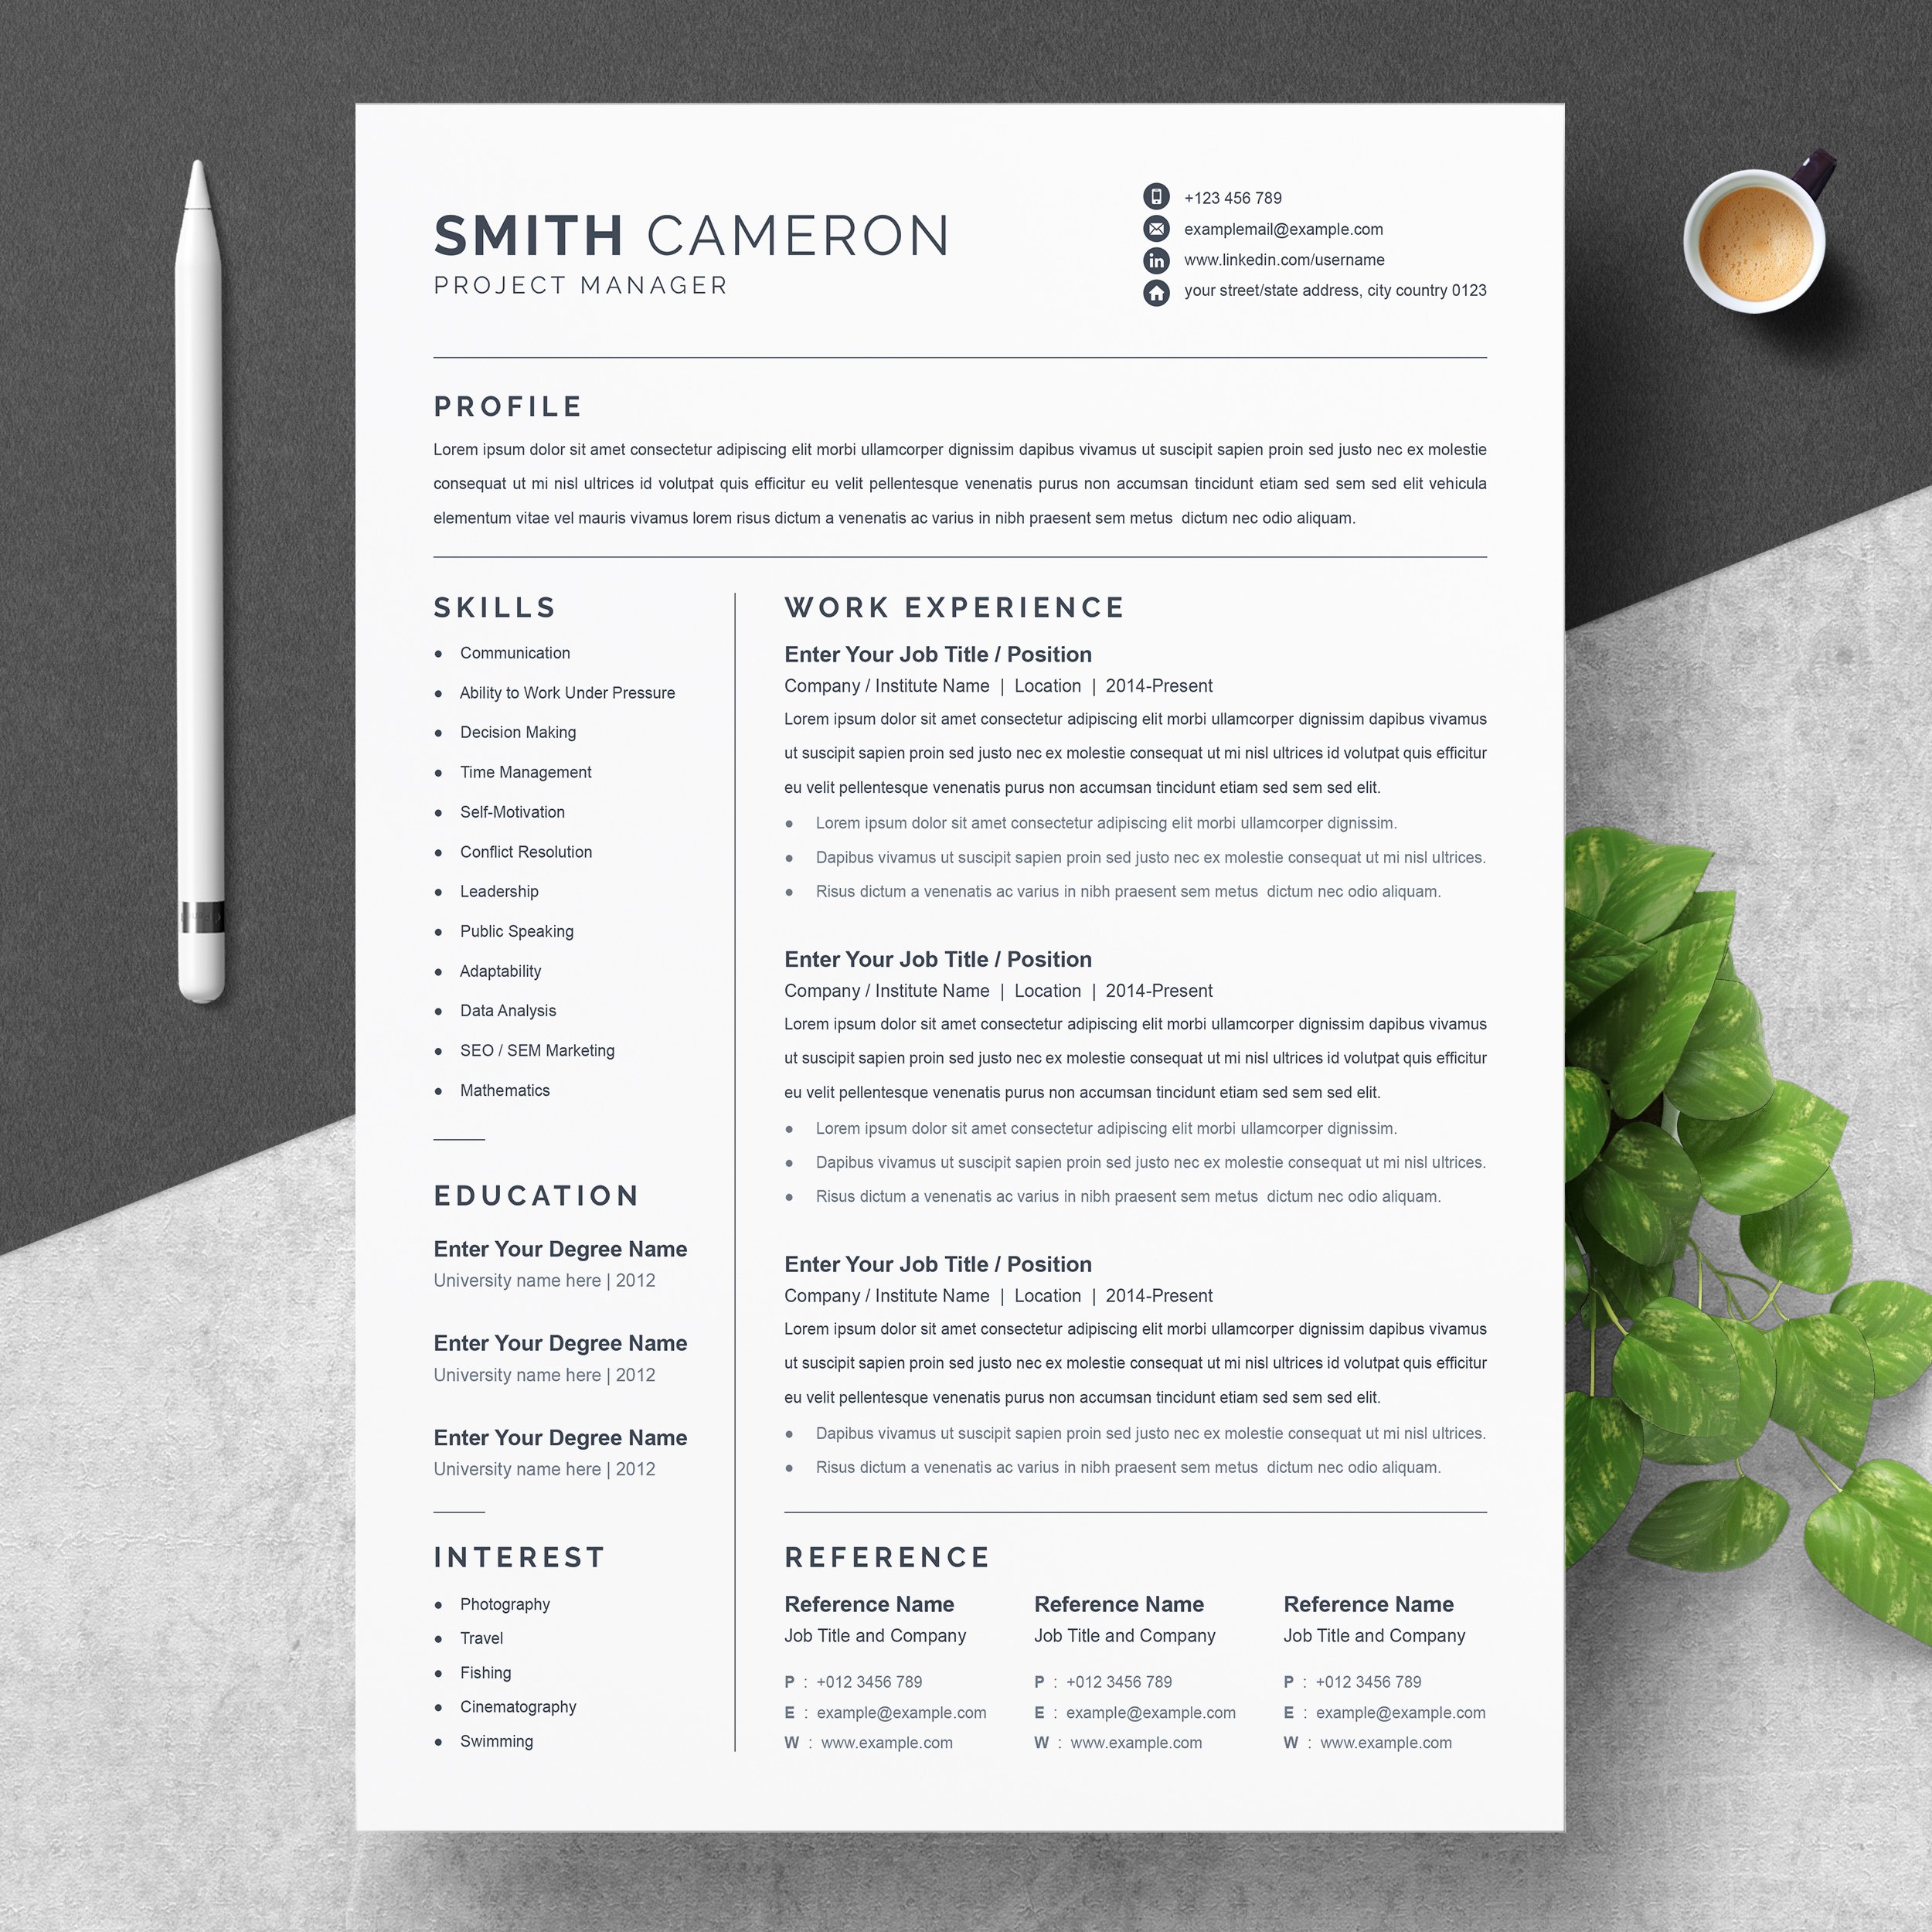 Minimalist Word Resume / CV Template cover image.